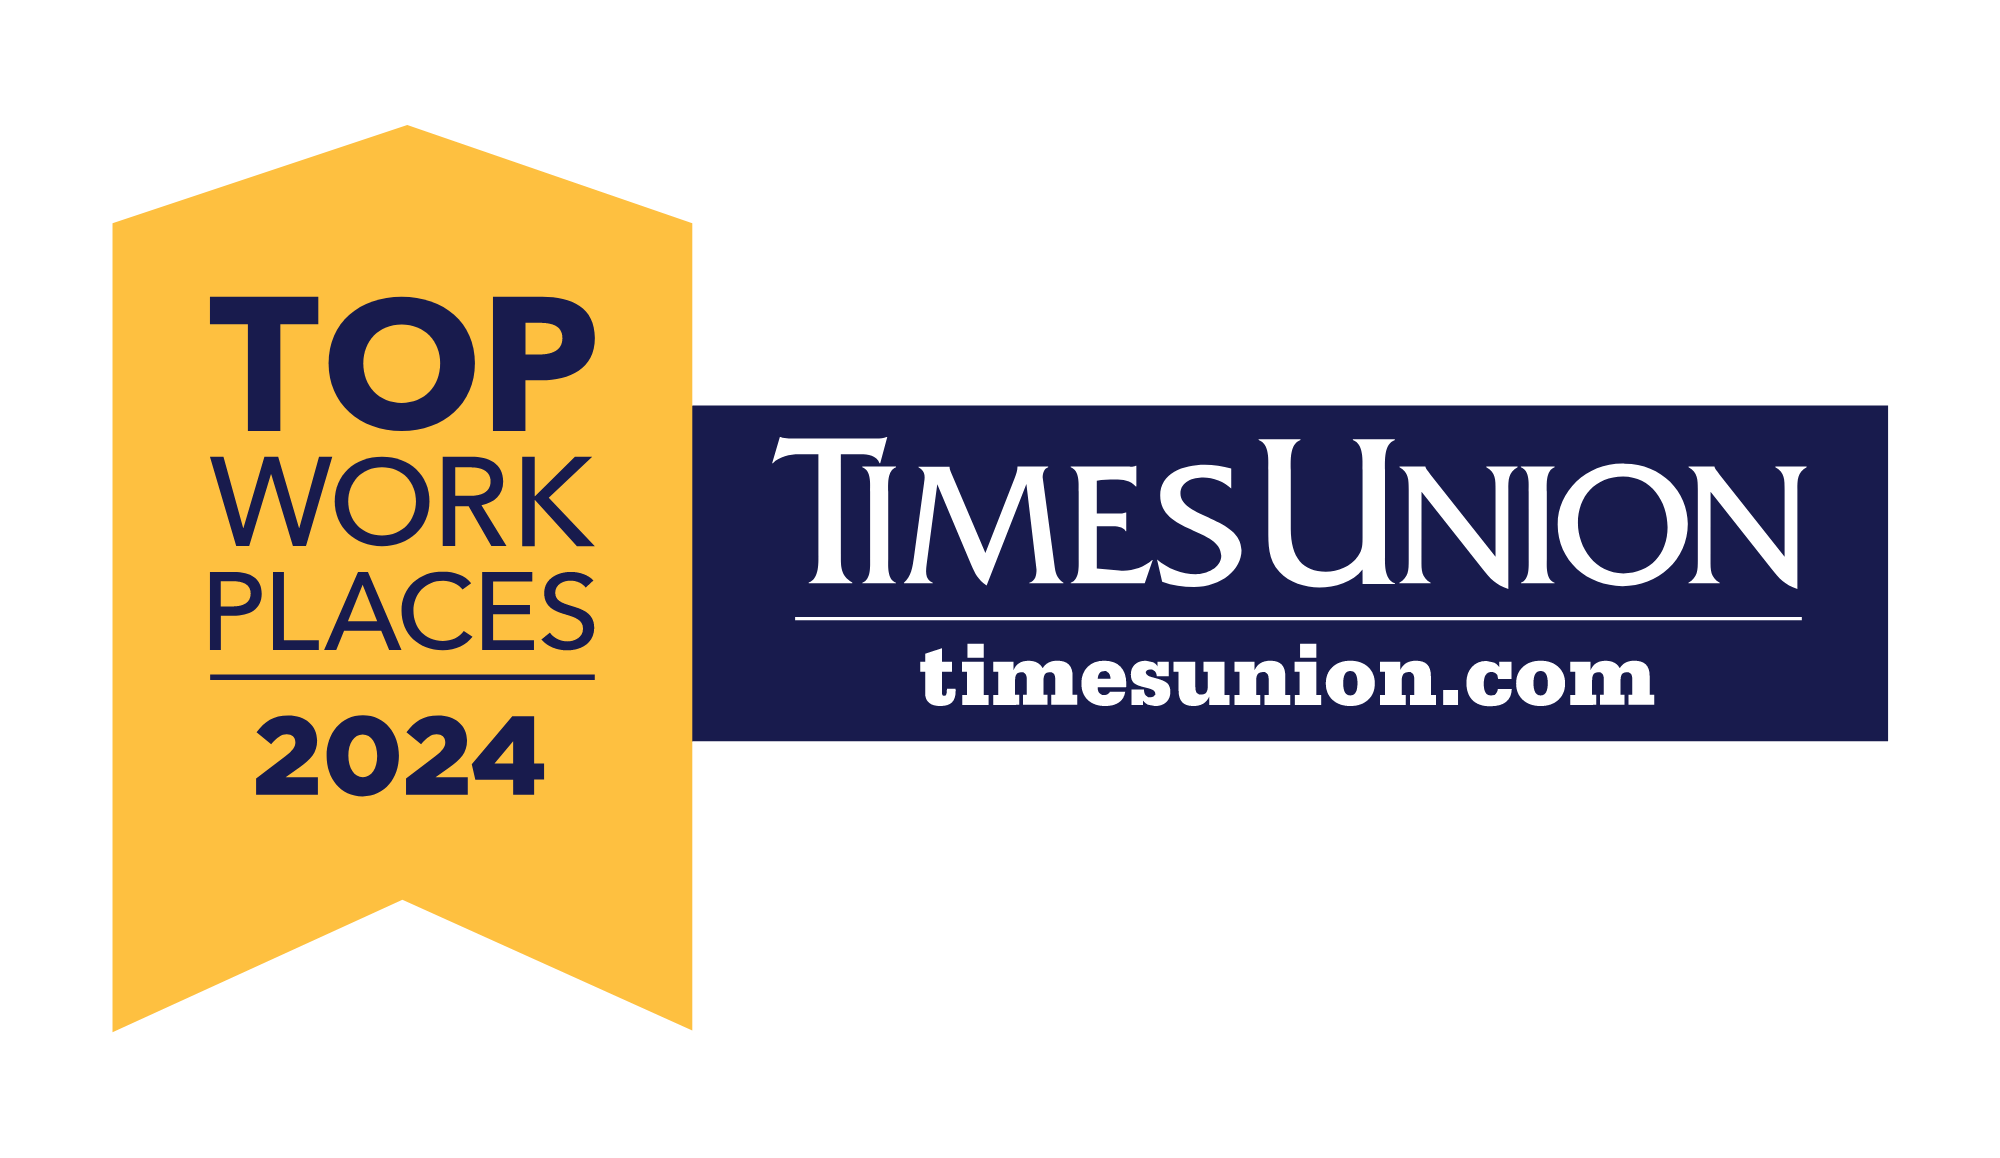 2021 Times Union Top Workplaces - Hinman Straub